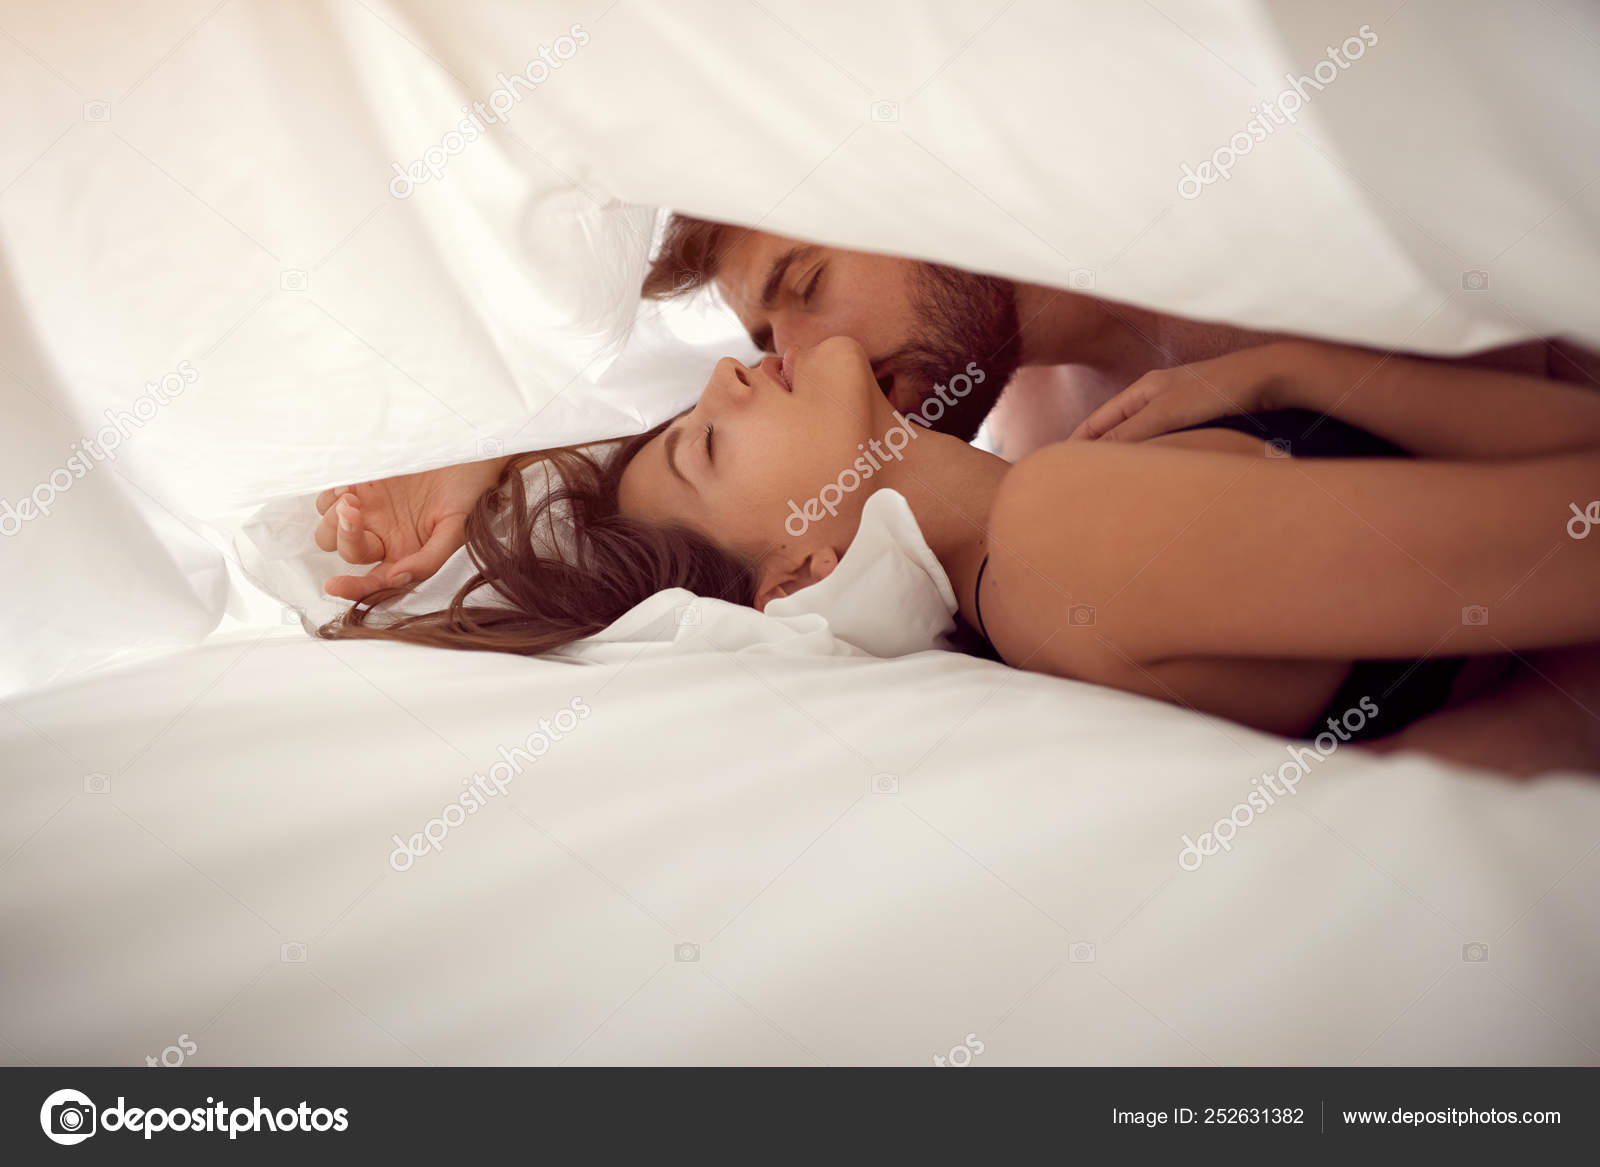 Bed love sex